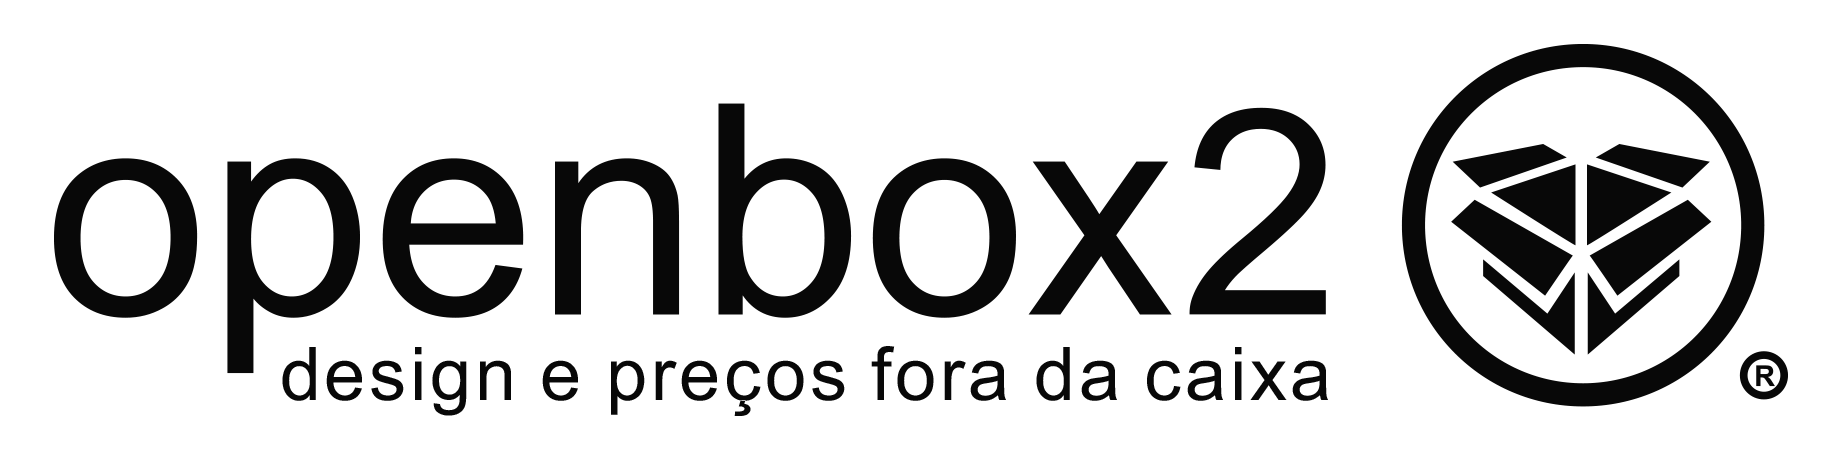 Openbox 2 Logo